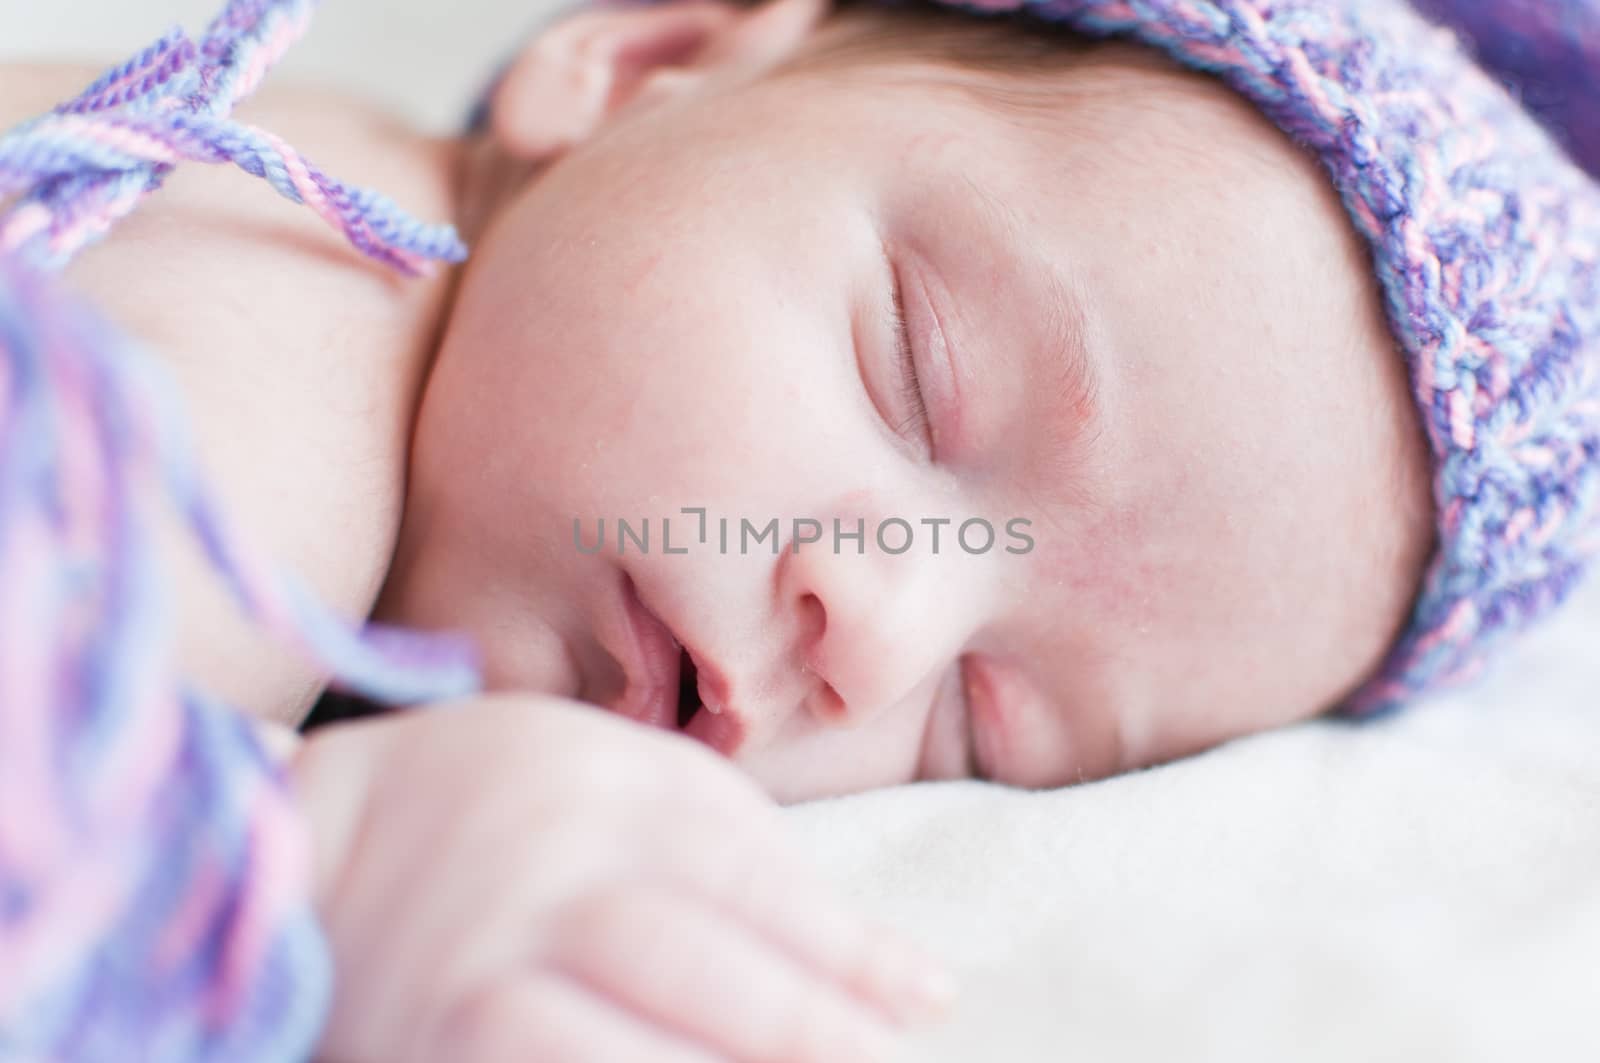 Horizontal portrait of the sleeping baby in purple hat